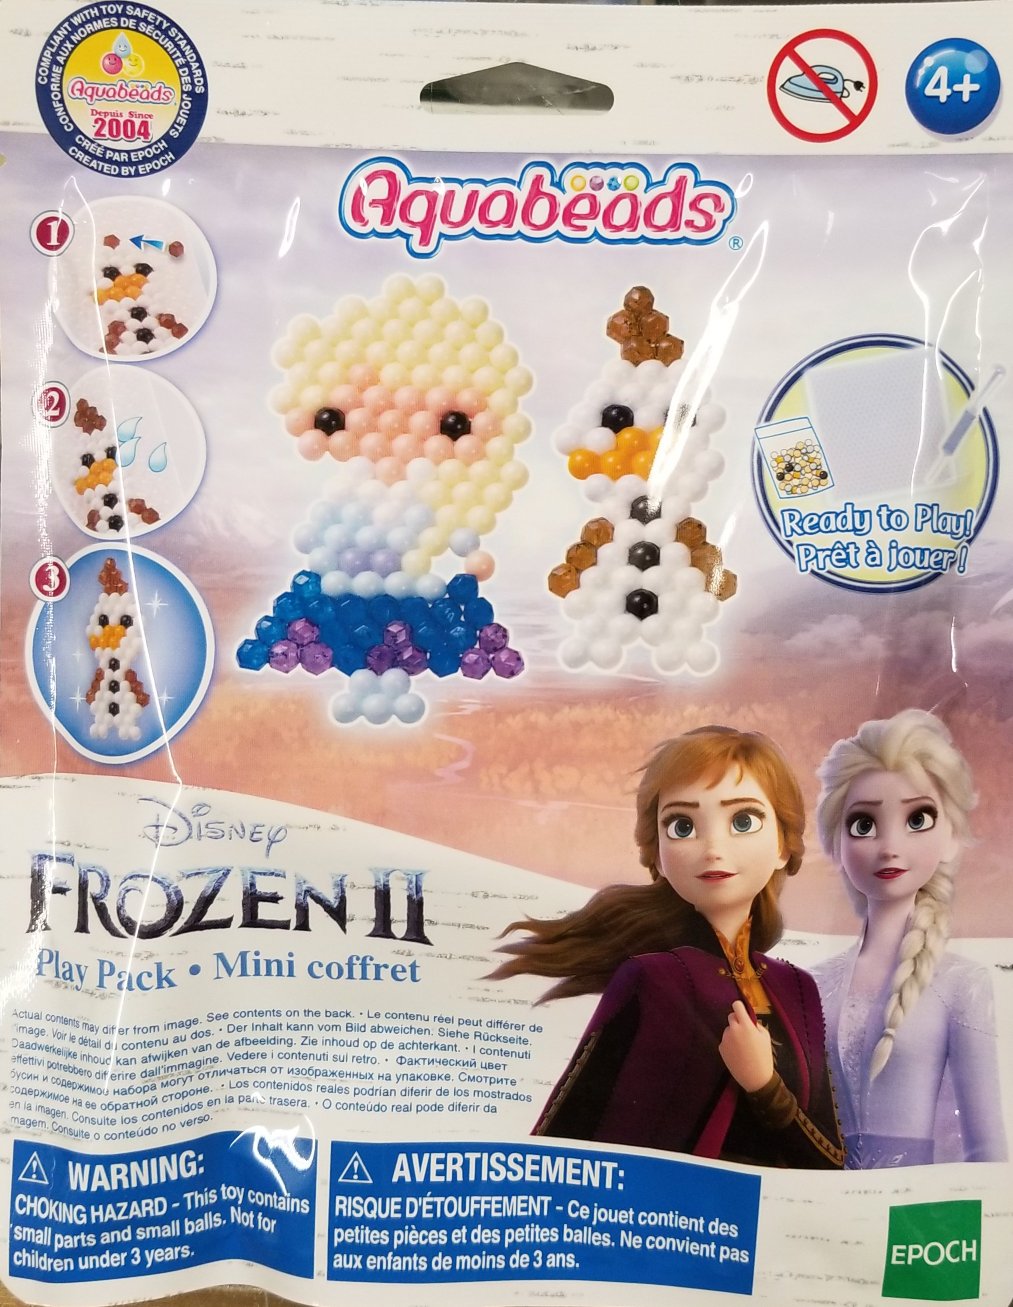 Aquabeads Frozen II Play Pack